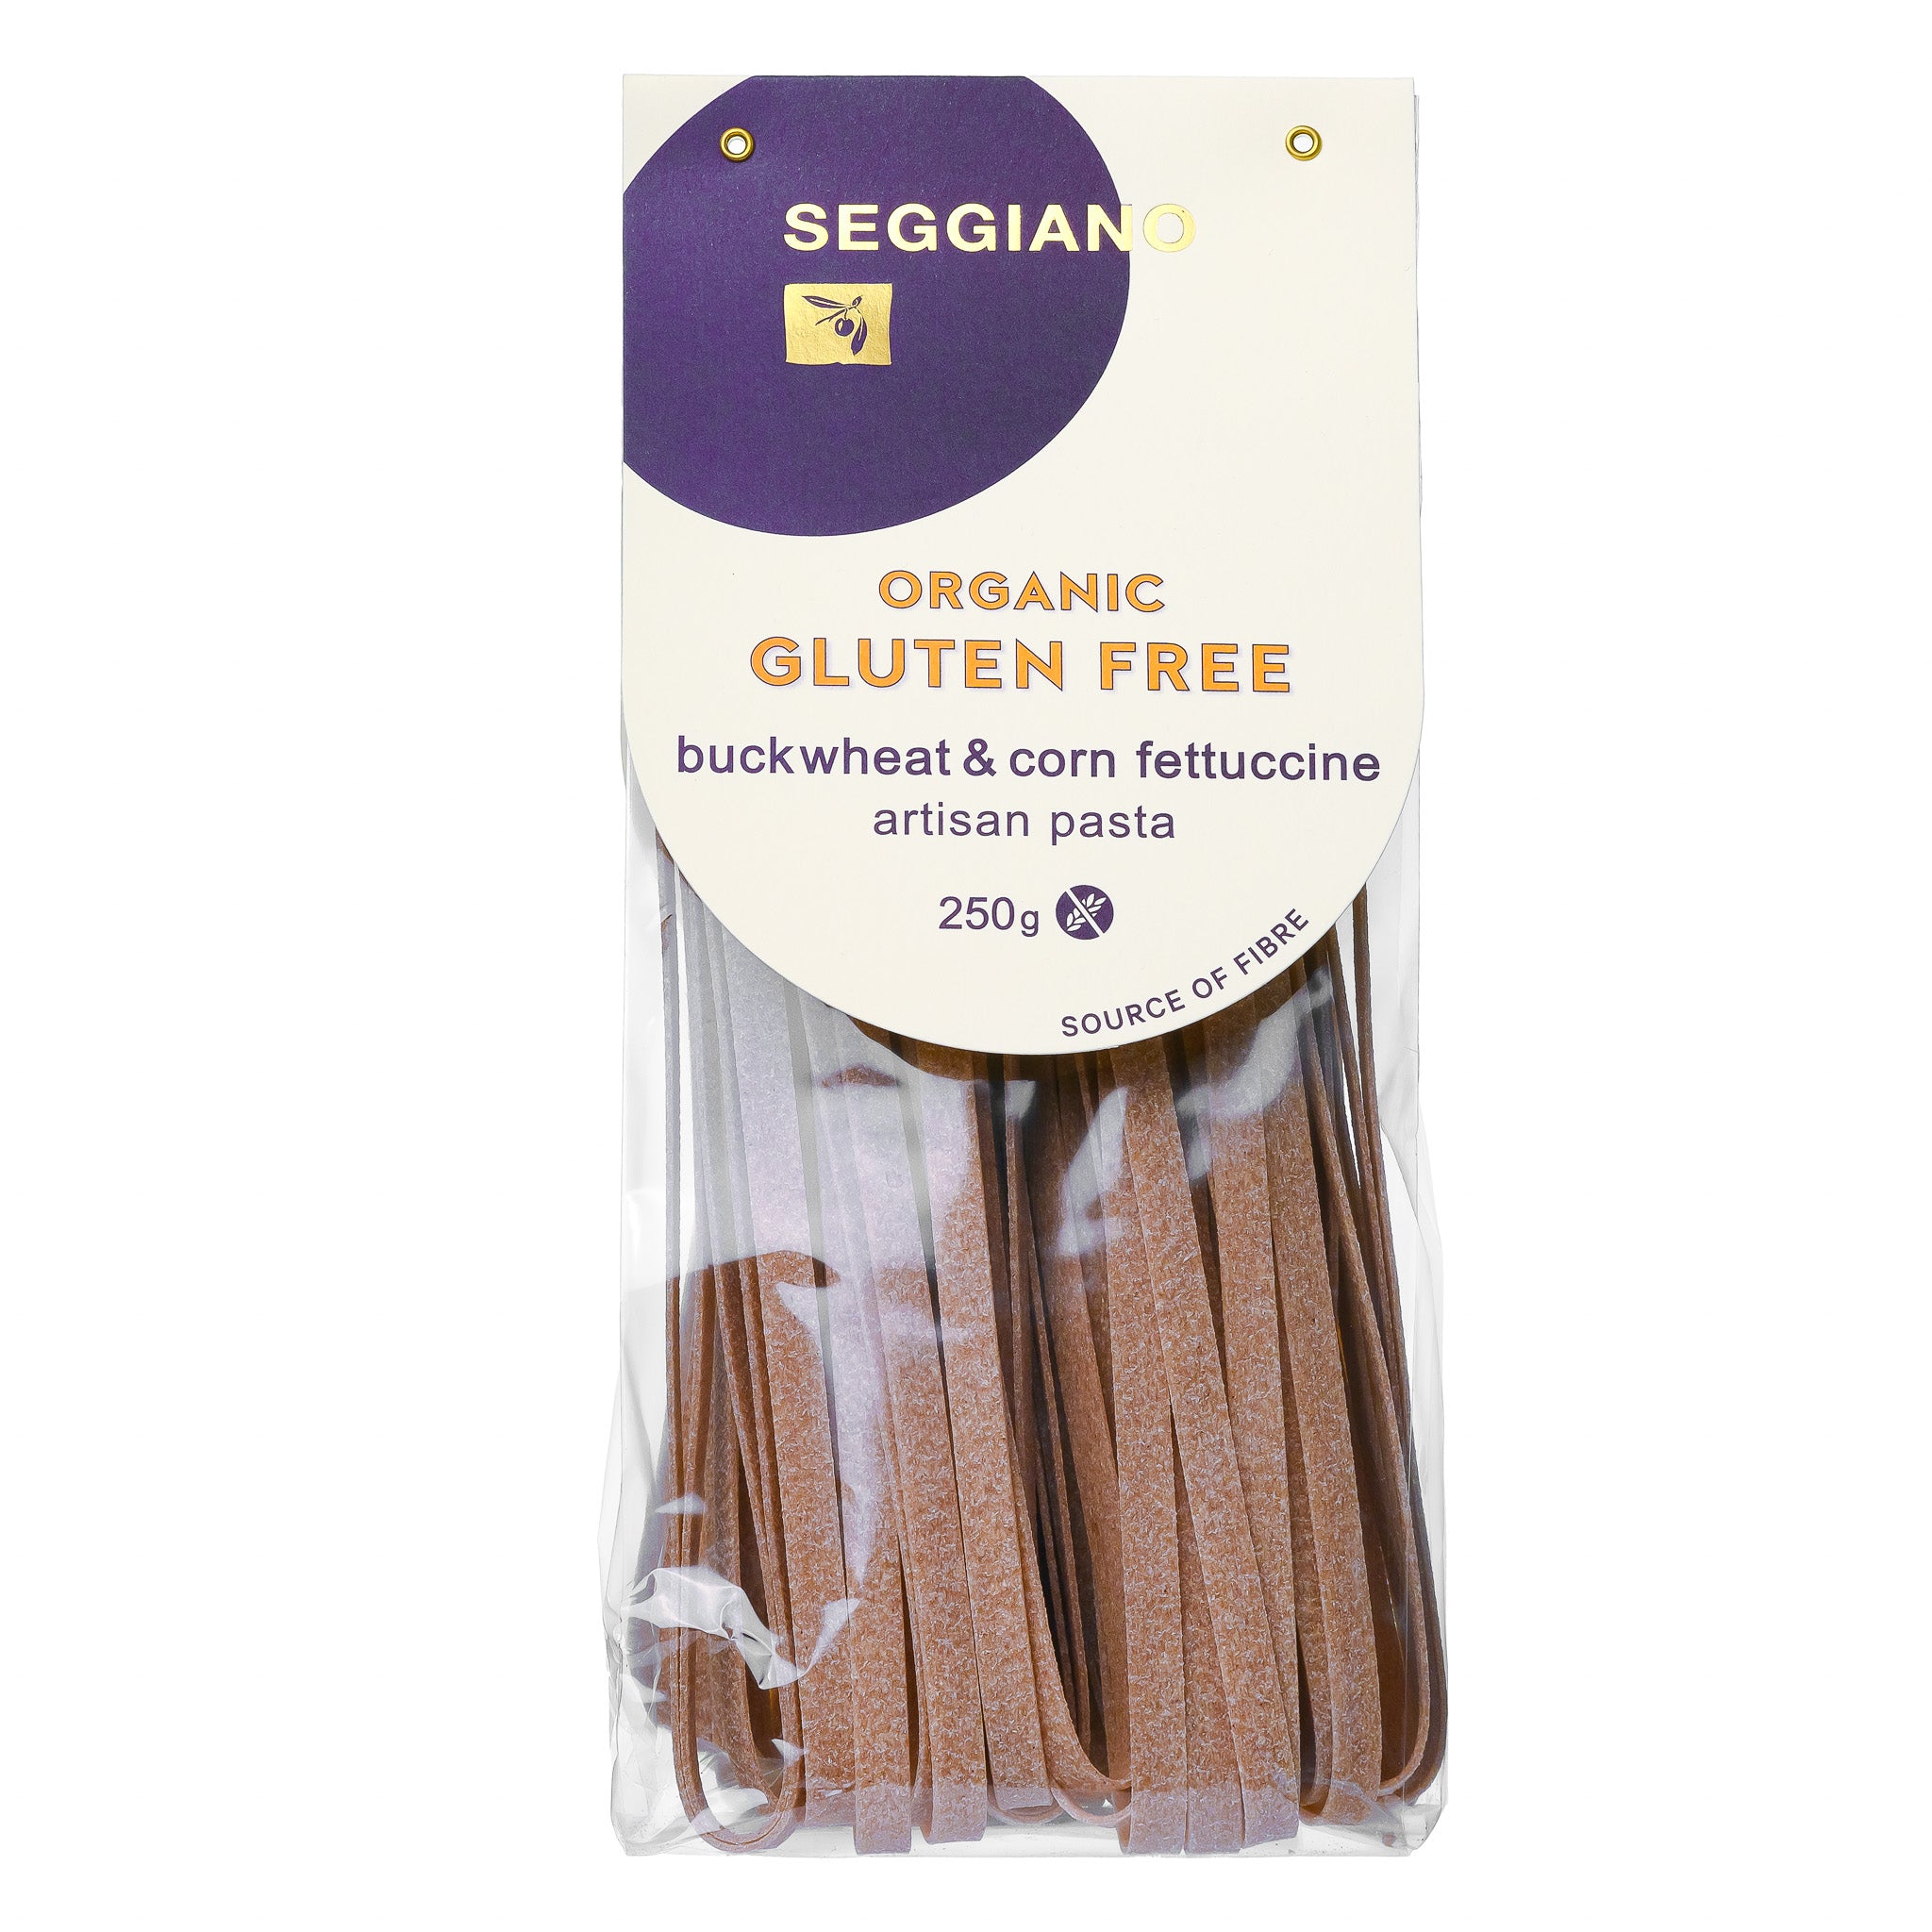 Seggiano - Organic Gluten Free Buckwheat & Corn Fettuccine